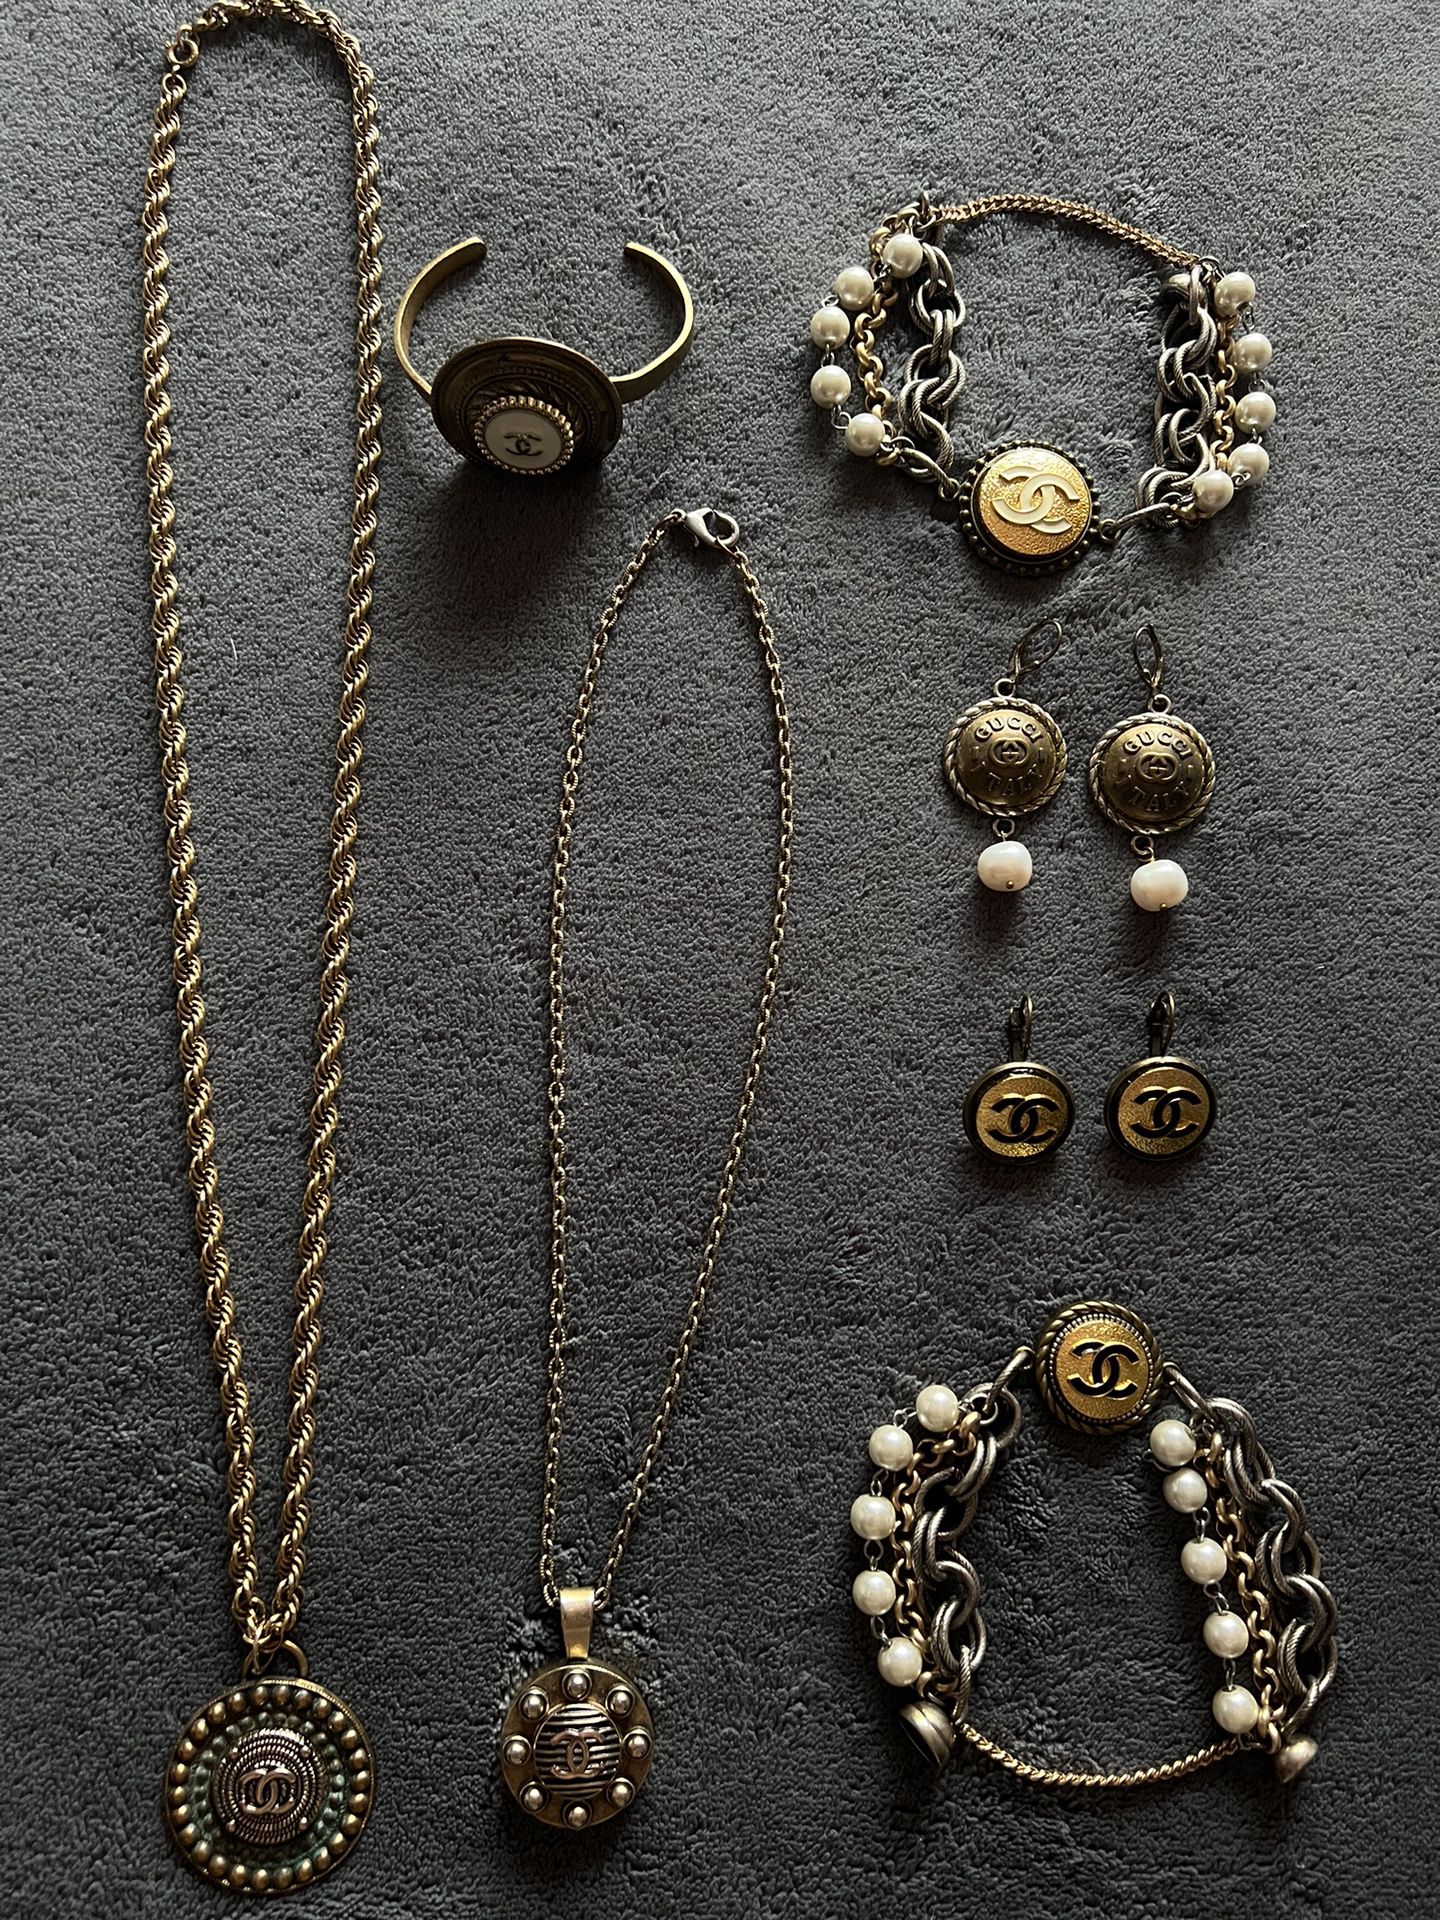 Repurposed vintage designer jewelry